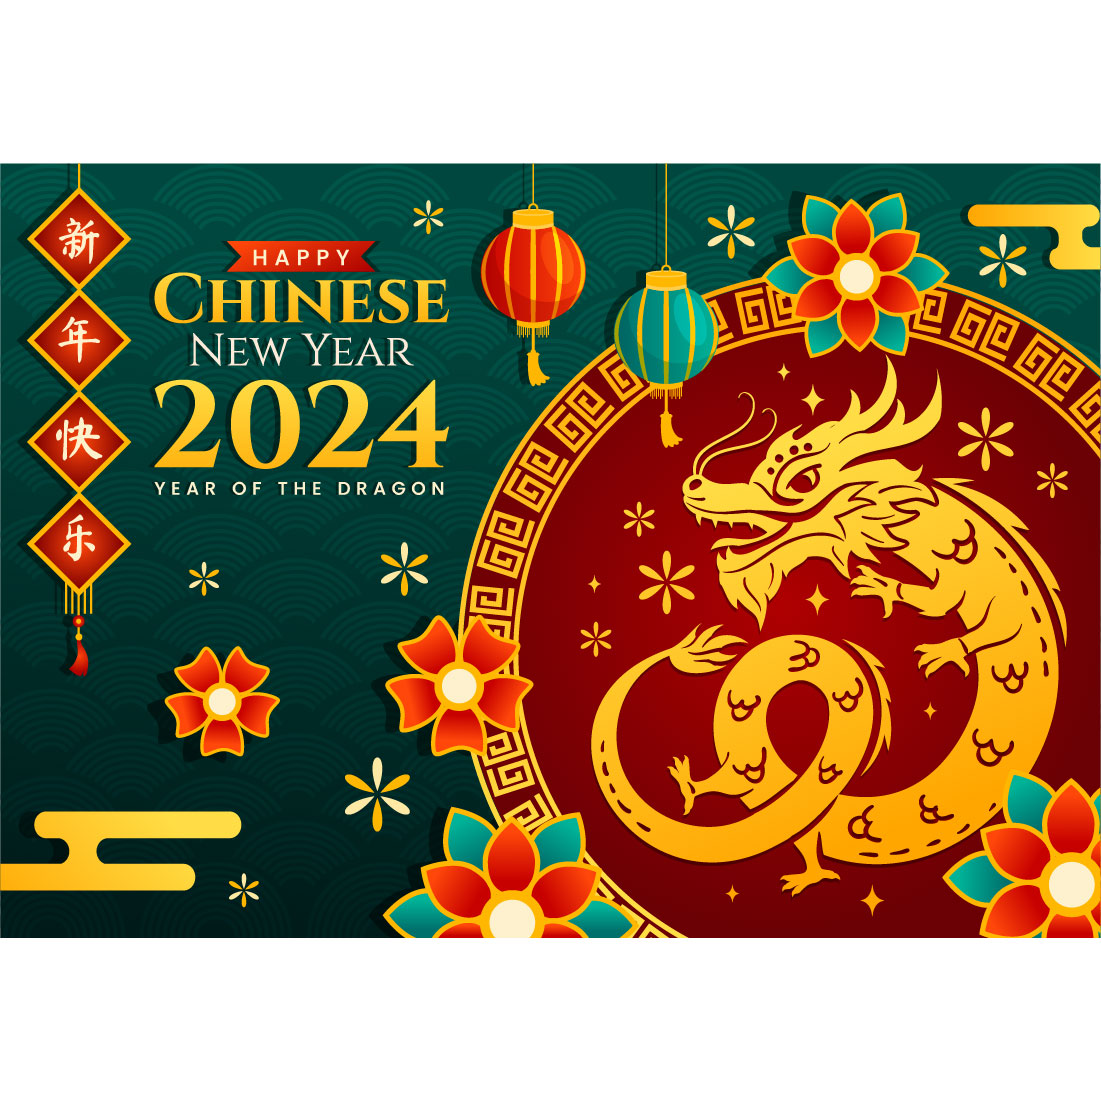 Chinese New Year 2024 Madterbundles 2 745 